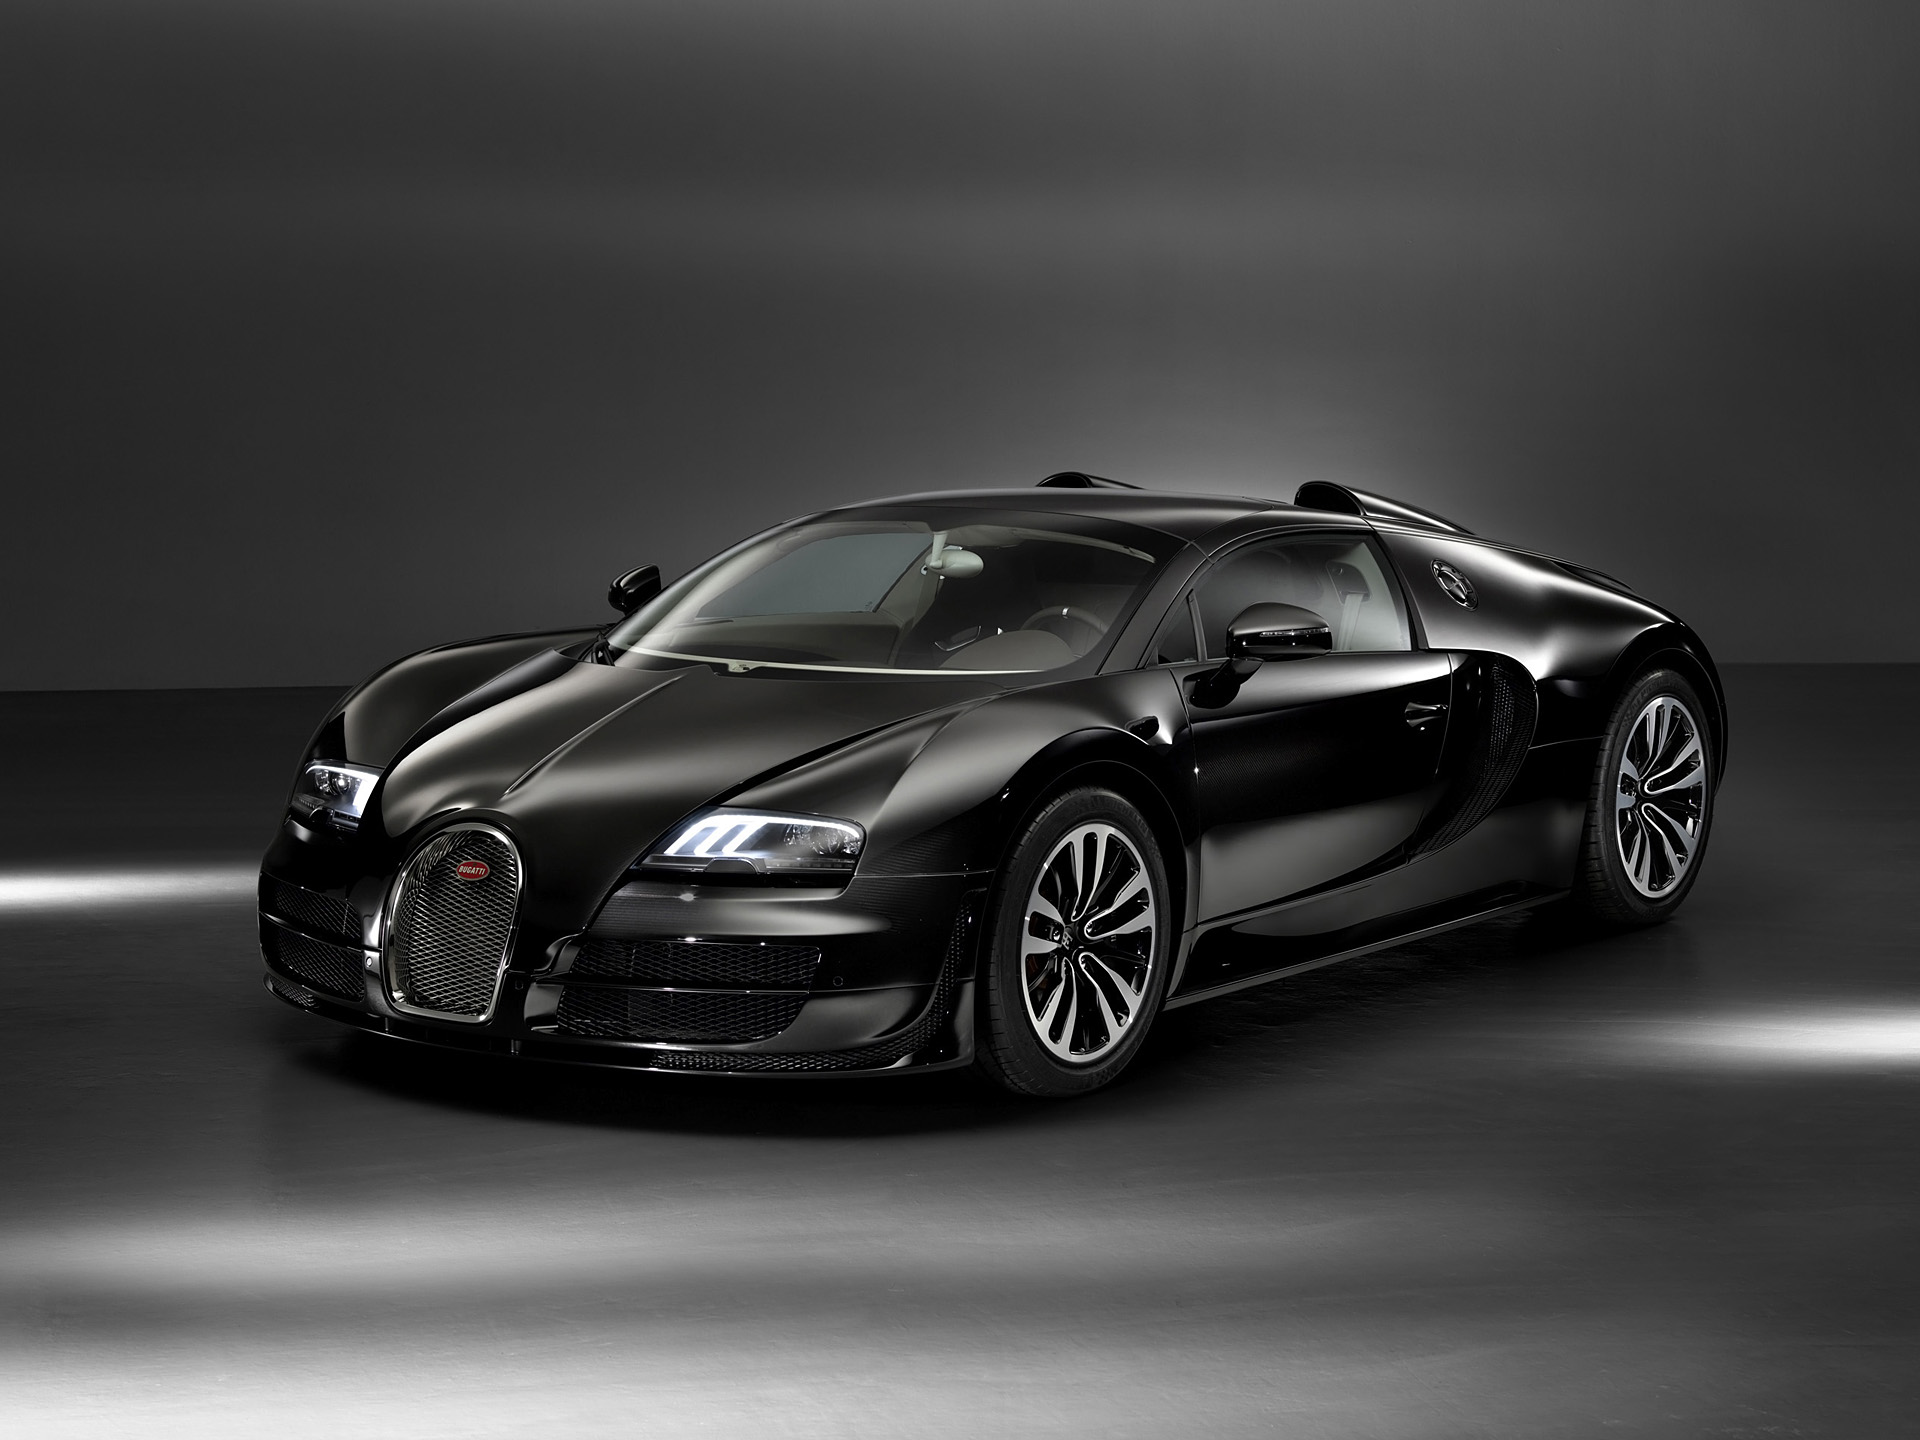  2013 Bugatti Veyron Jean Bugatti Wallpaper.